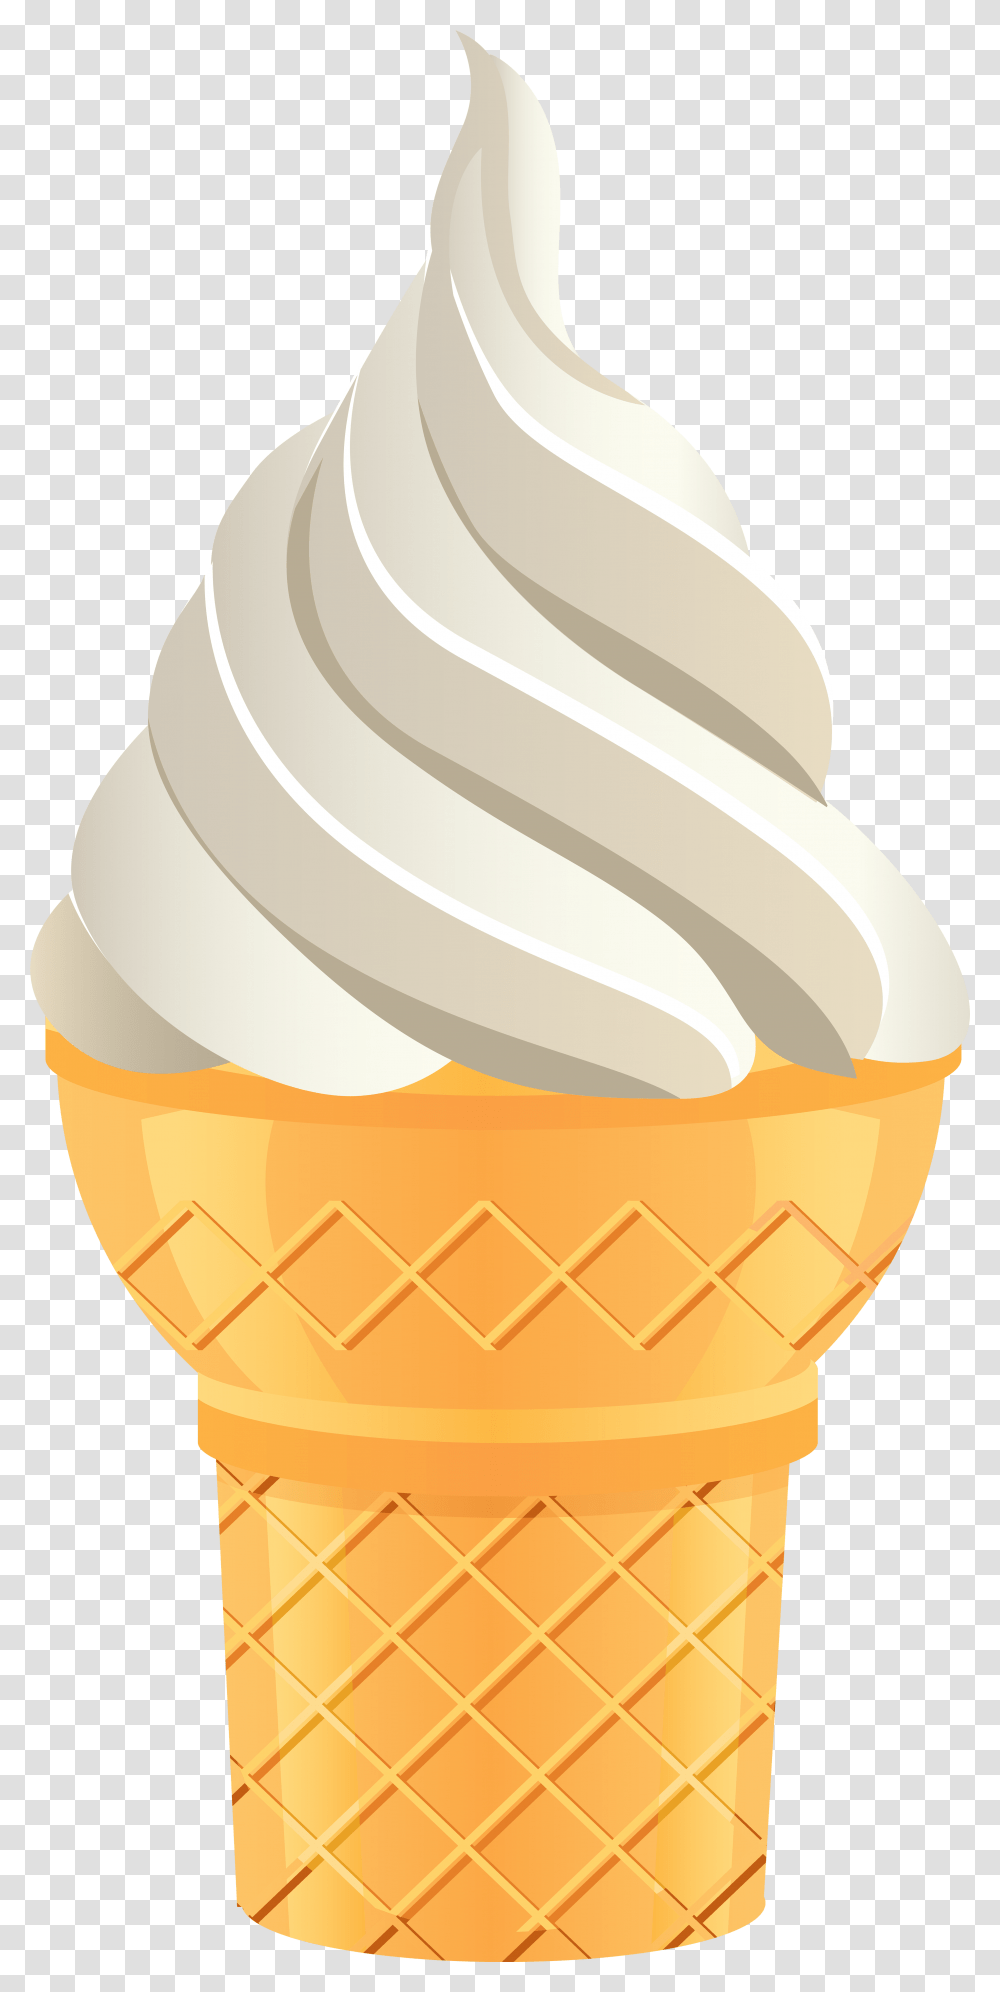 Ice Cream Cone Flavor Cup Ice Cream Background Clipart, Dessert, Food, Creme, Wedding Cake Transparent Png